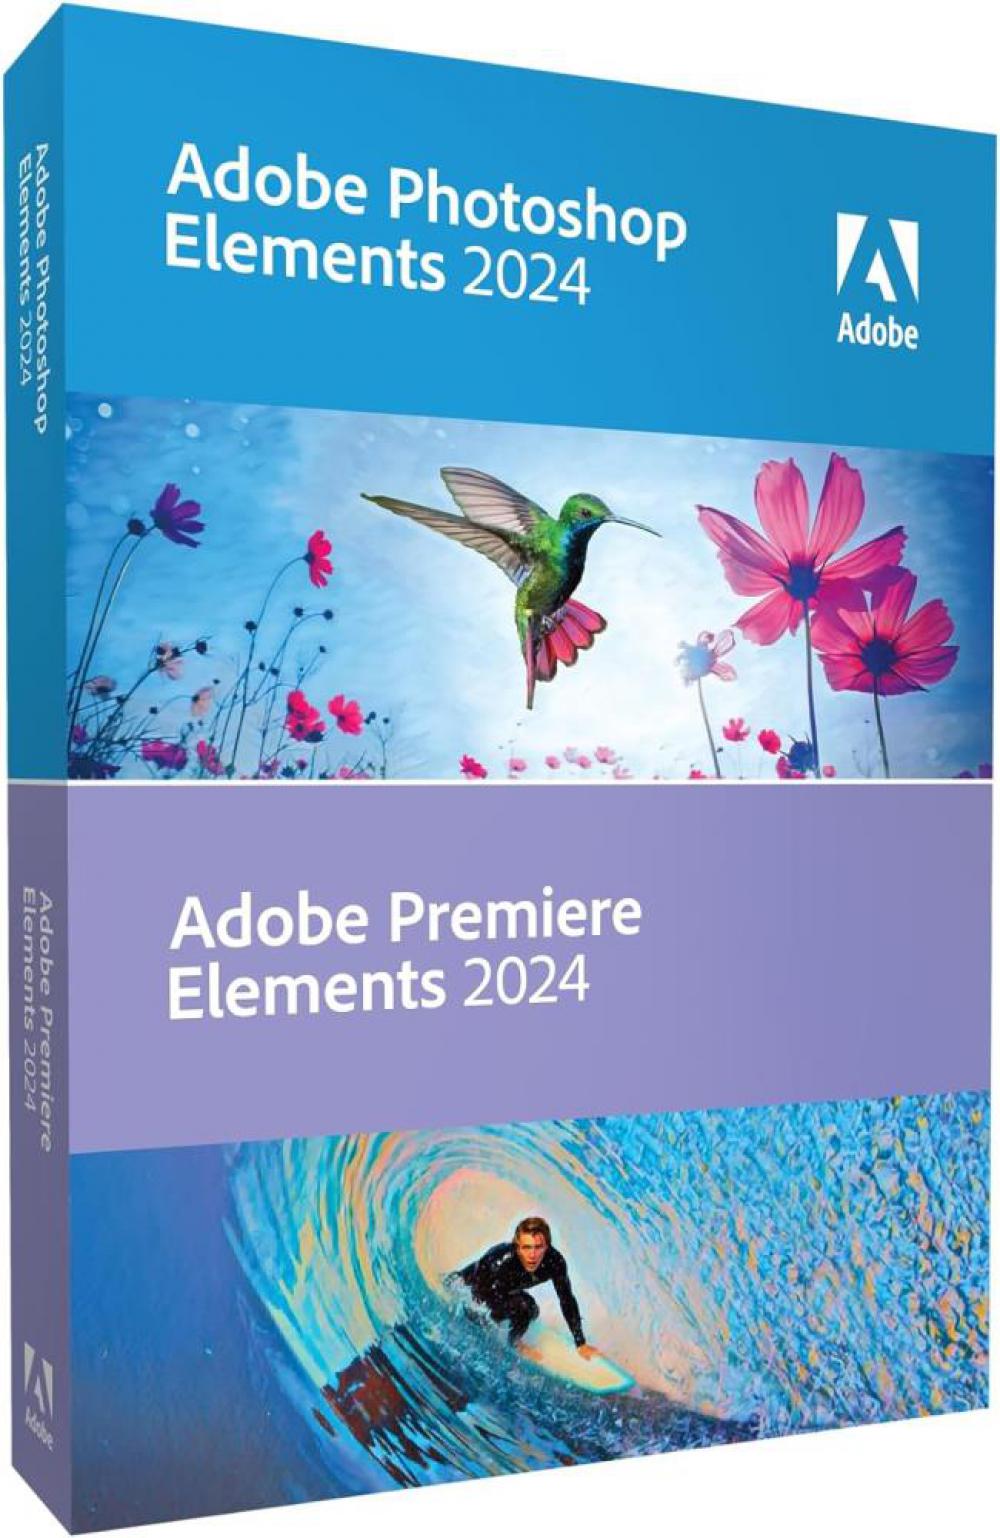 Adobe Photoshop + Premiere Elements 2024 WIN ESD